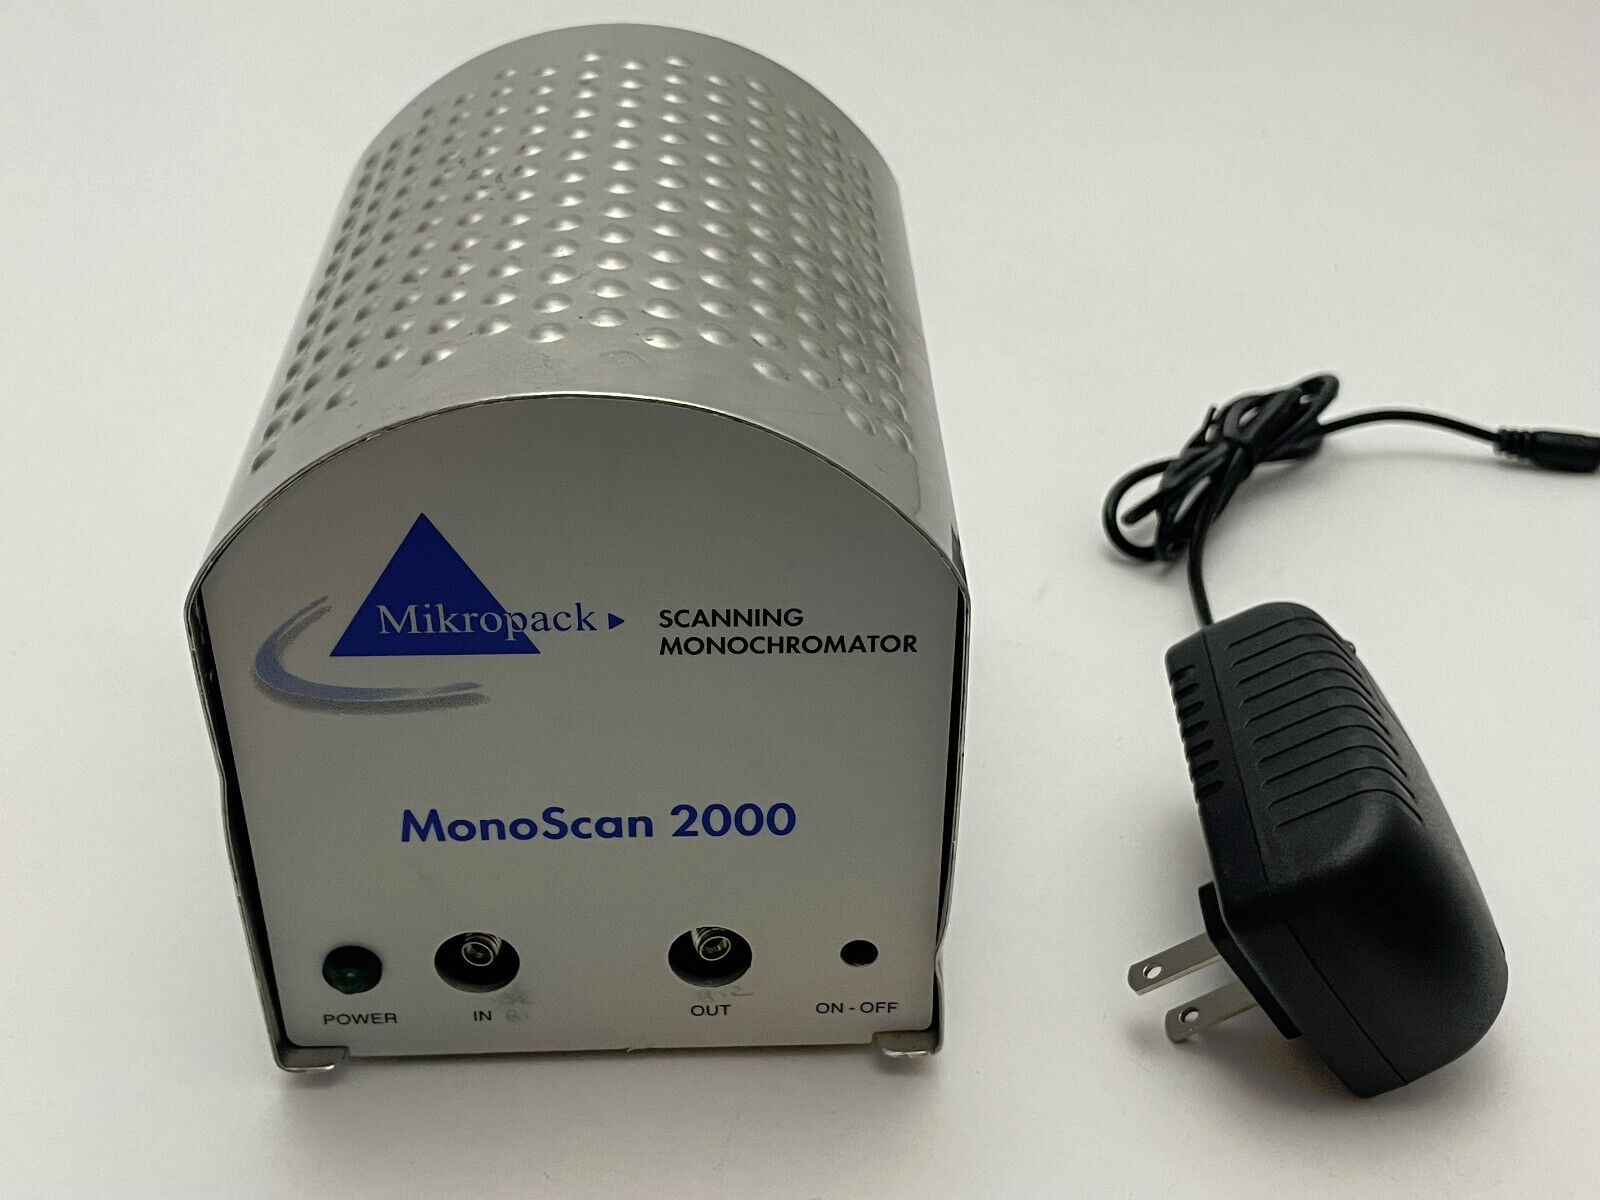 Ocean Optics Mikropack MonoScan 2000 Scanning Monochromator Spectrometer